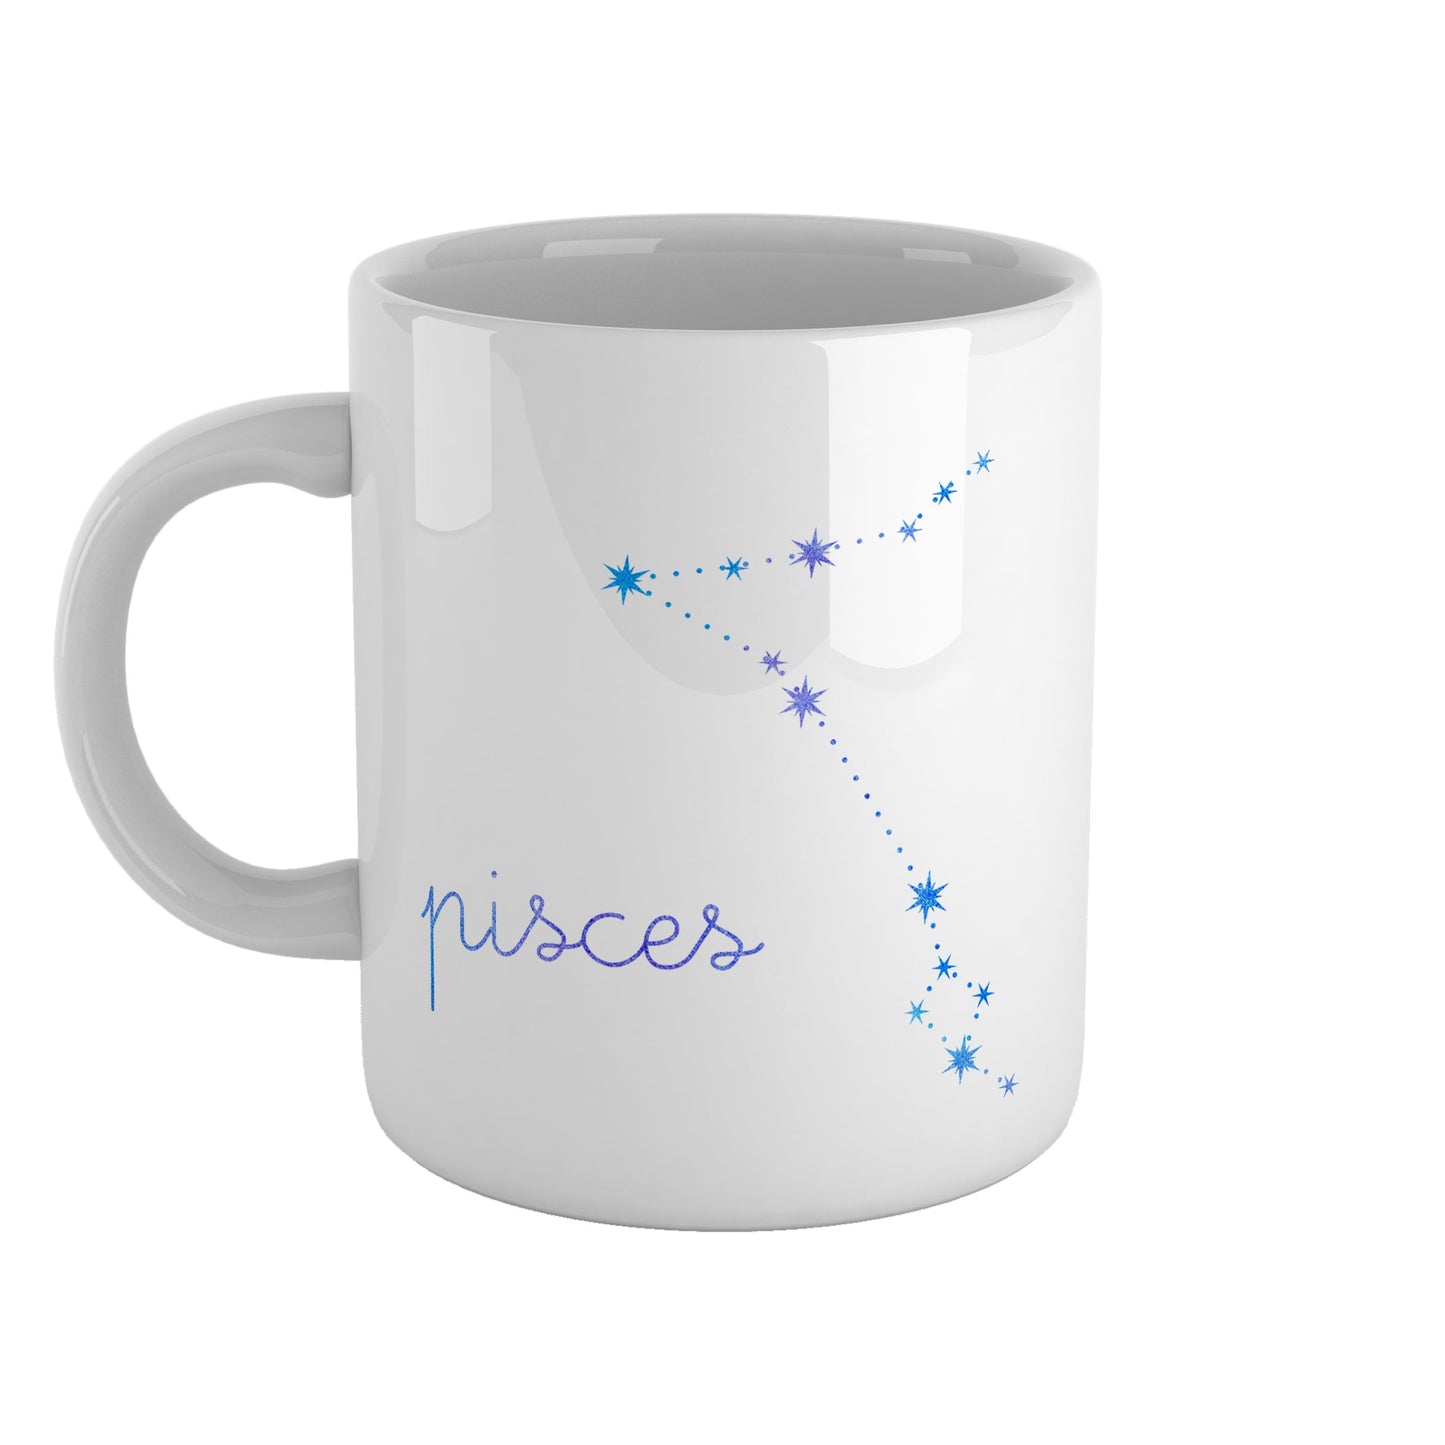 Pisces constellation | Ceramic mug-Ceramic mug-Adnil Creations